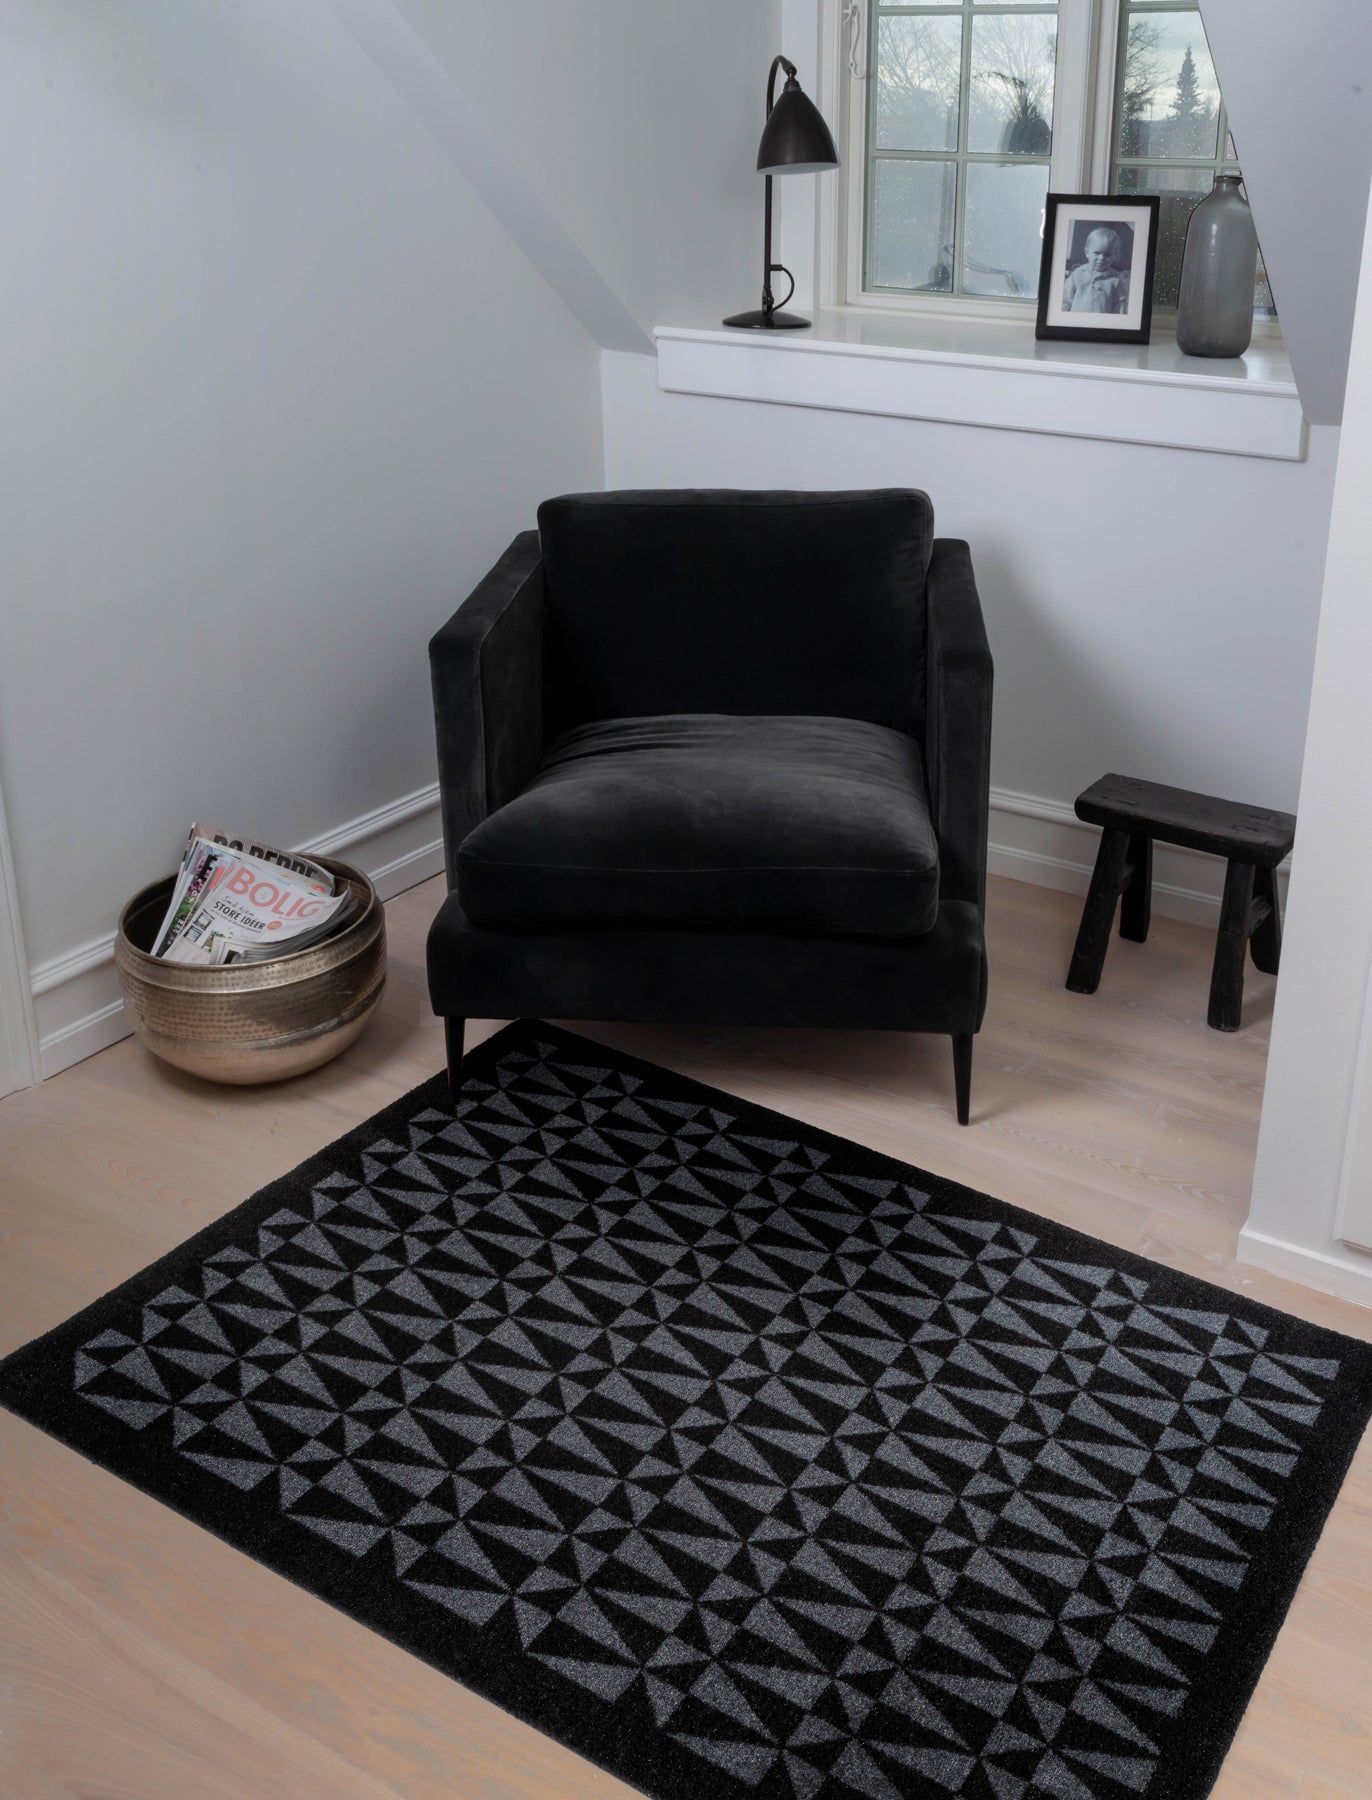 Floor mat 67 x 120 cm - Graphic/Black Gray